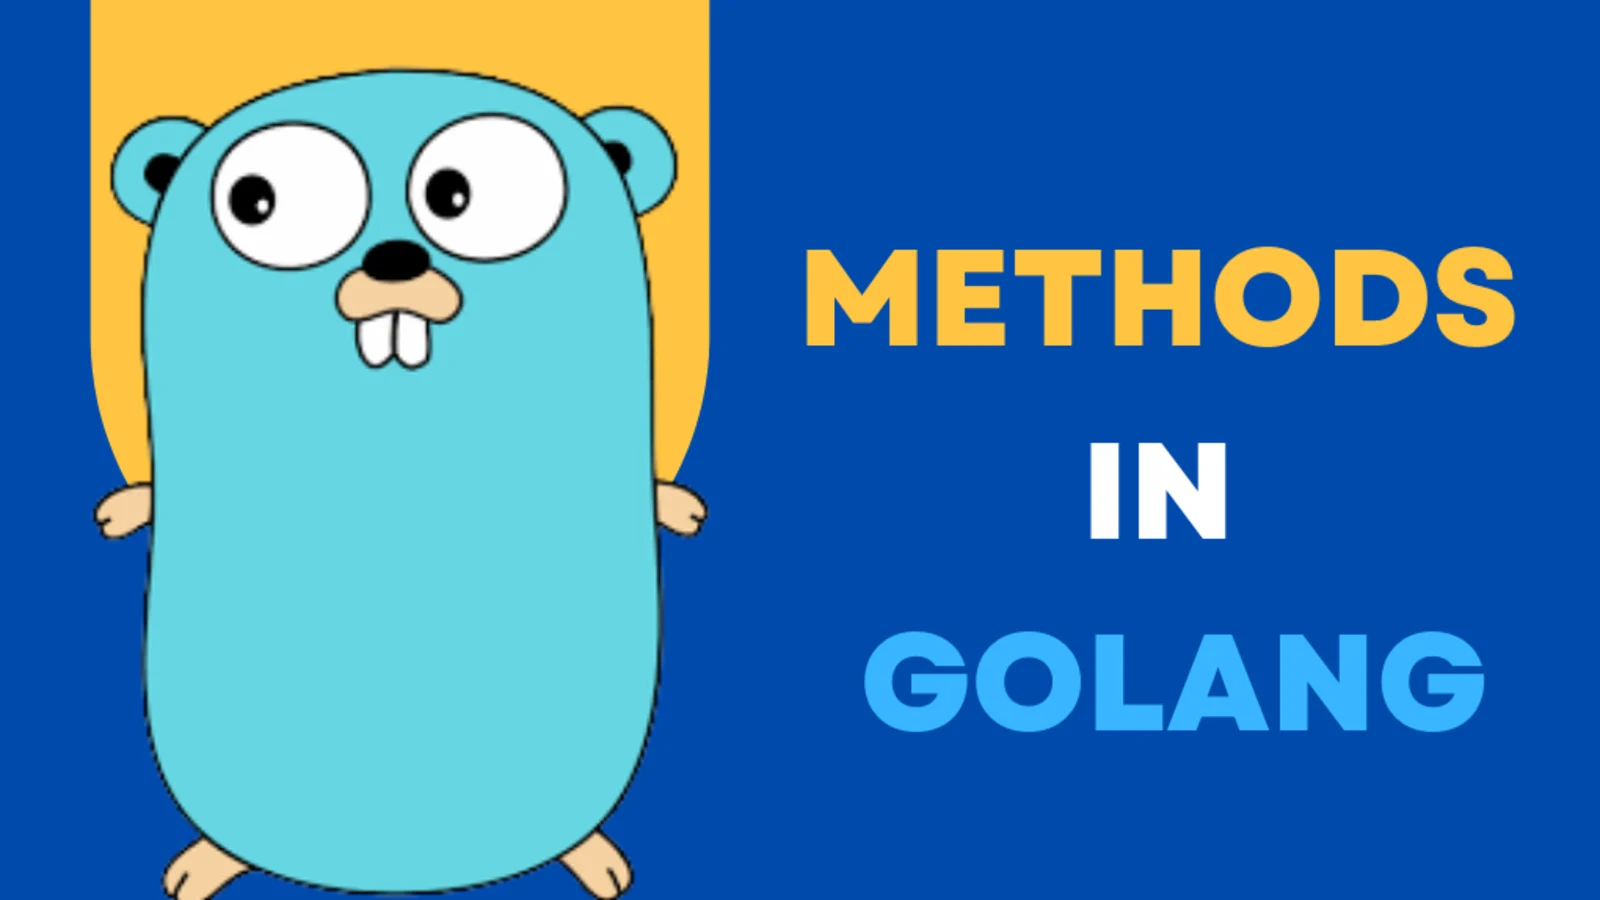 Methods tron Golang